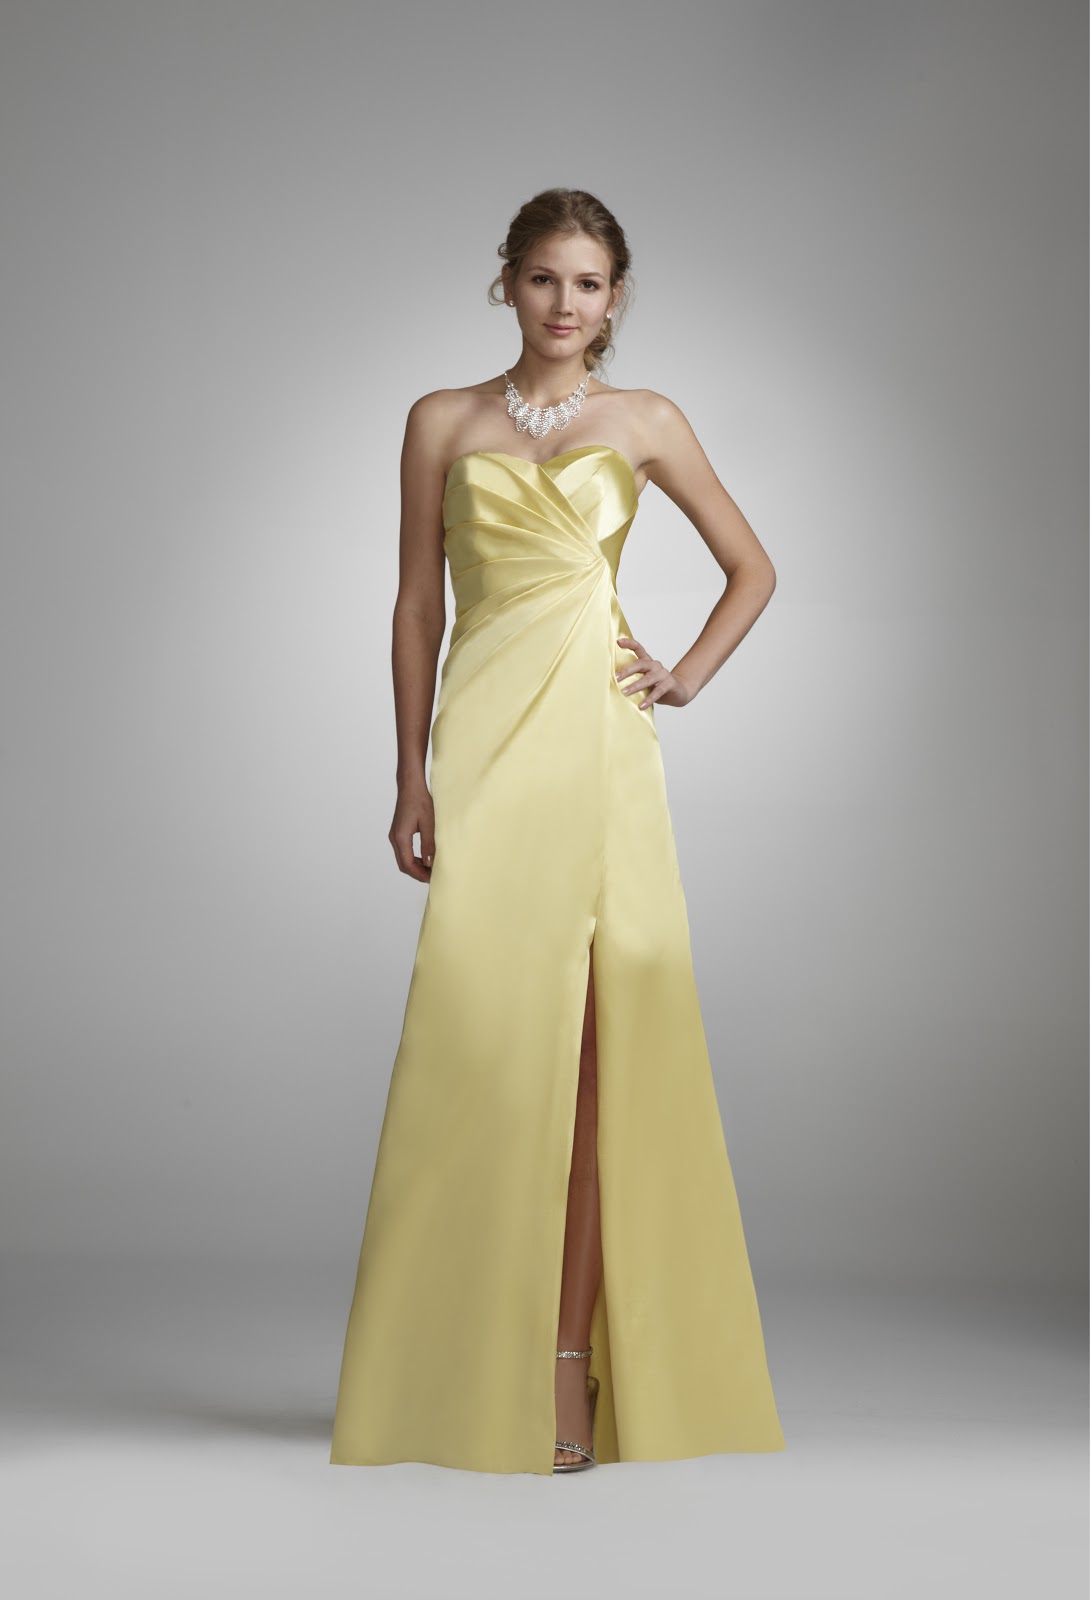 Fall Fashion Trend: Yellow Dresses Make a Splash